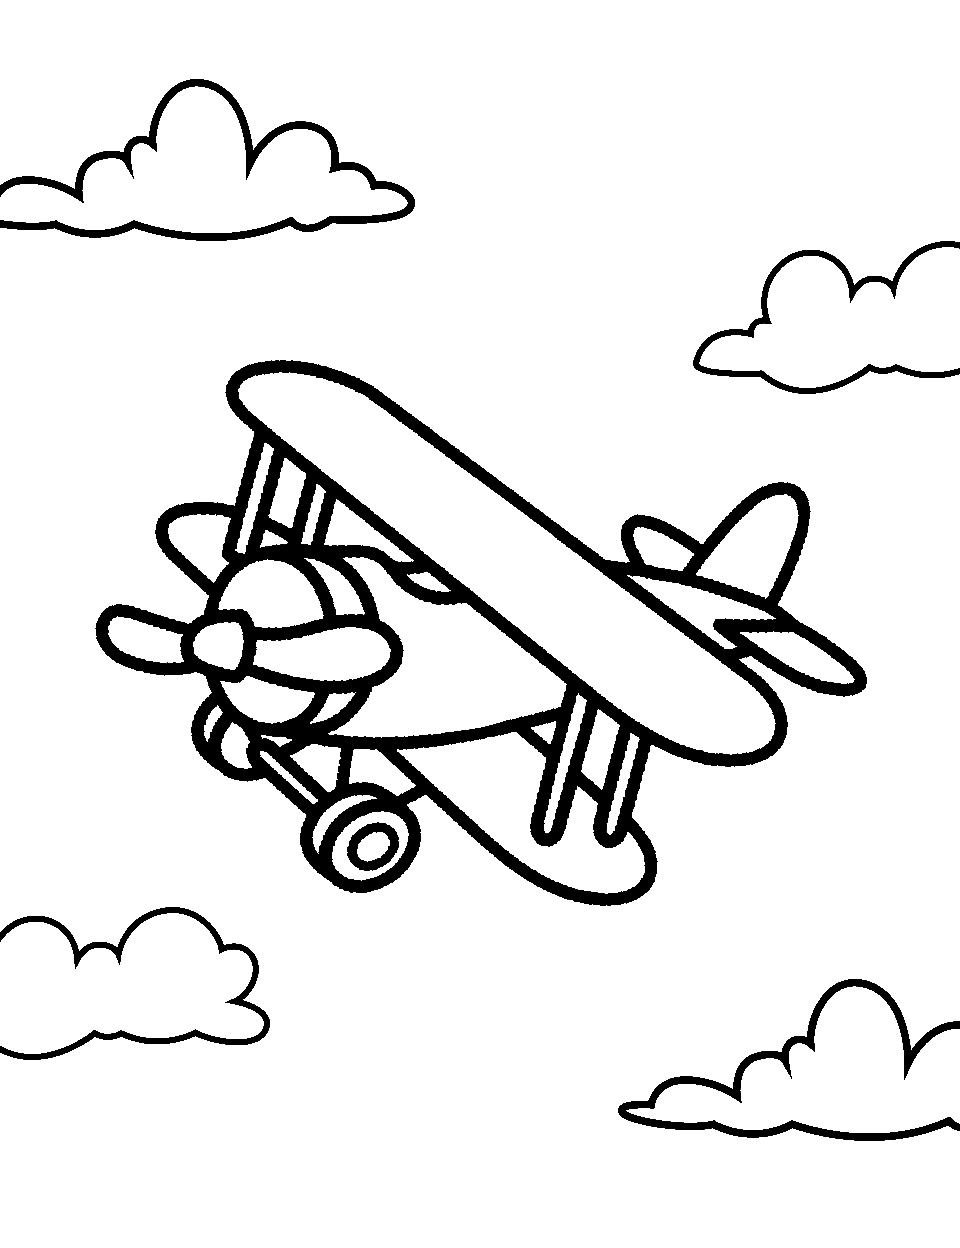 Cartoonish Stunt Biplane Airplane Coloring Page - A cartoonish stunt biplane performing stunts in the sky.